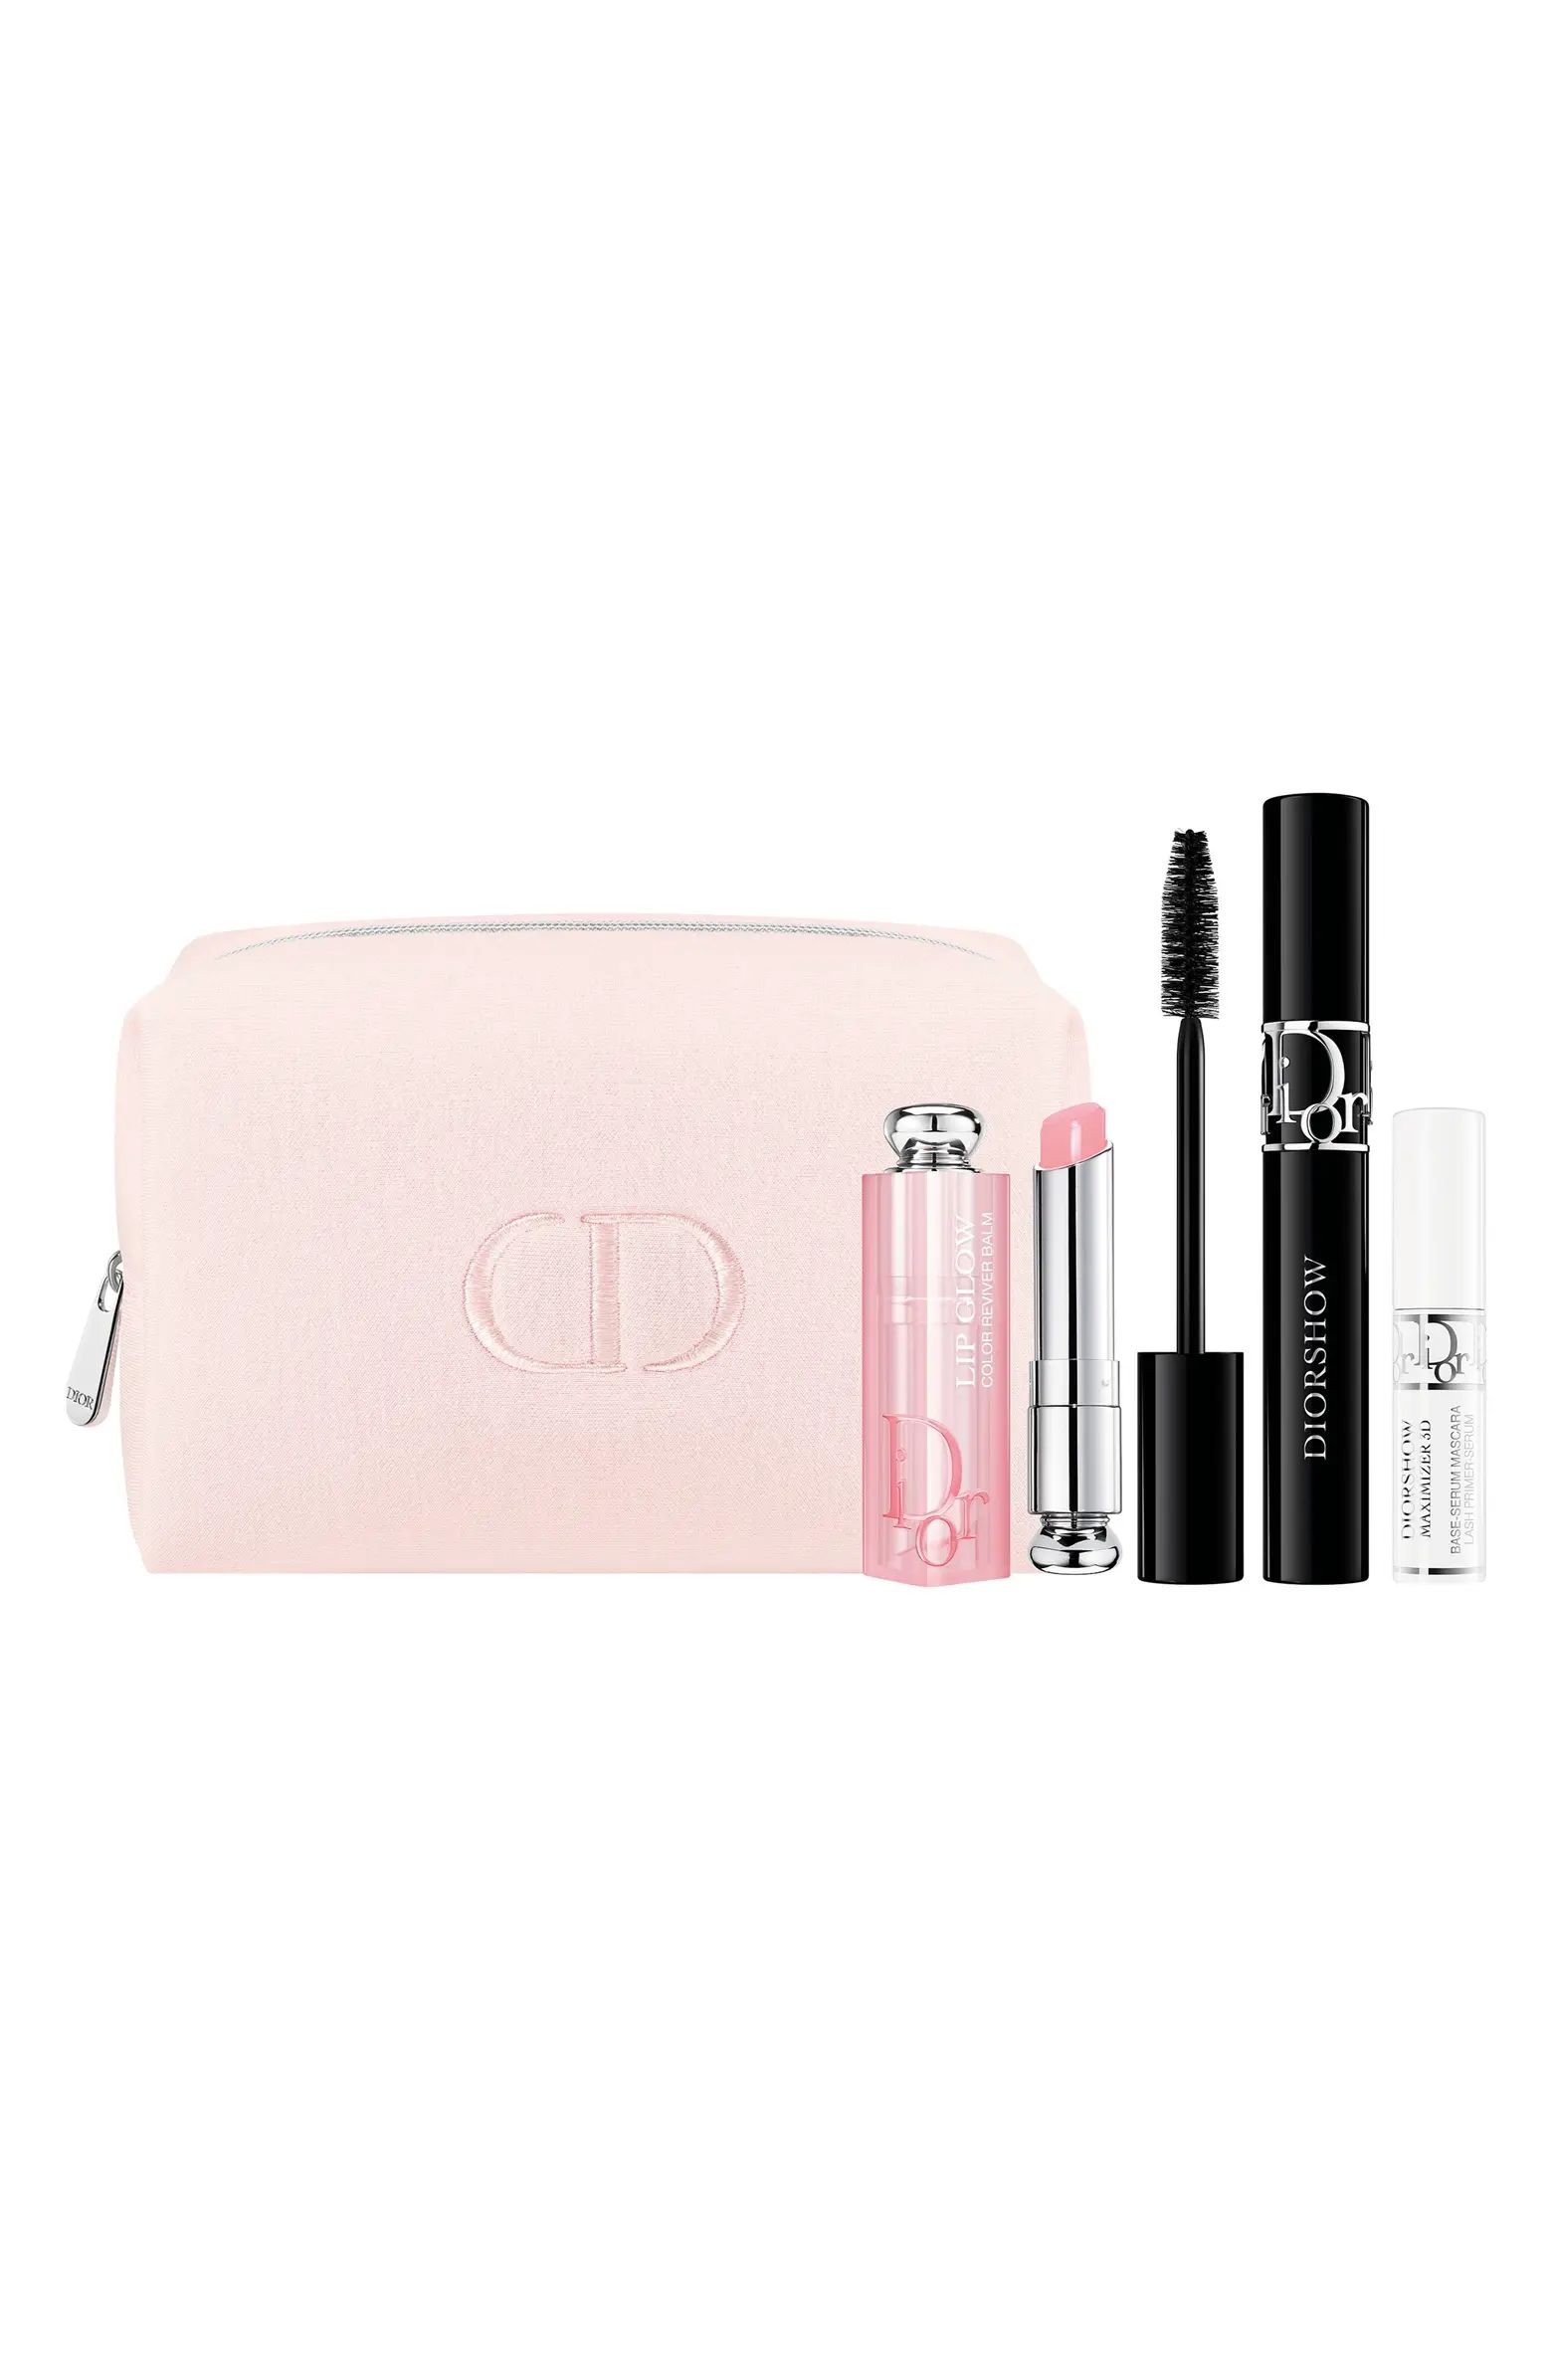 The Diorshow & Dior Addict Makeup Set $79 Value | Nordstrom